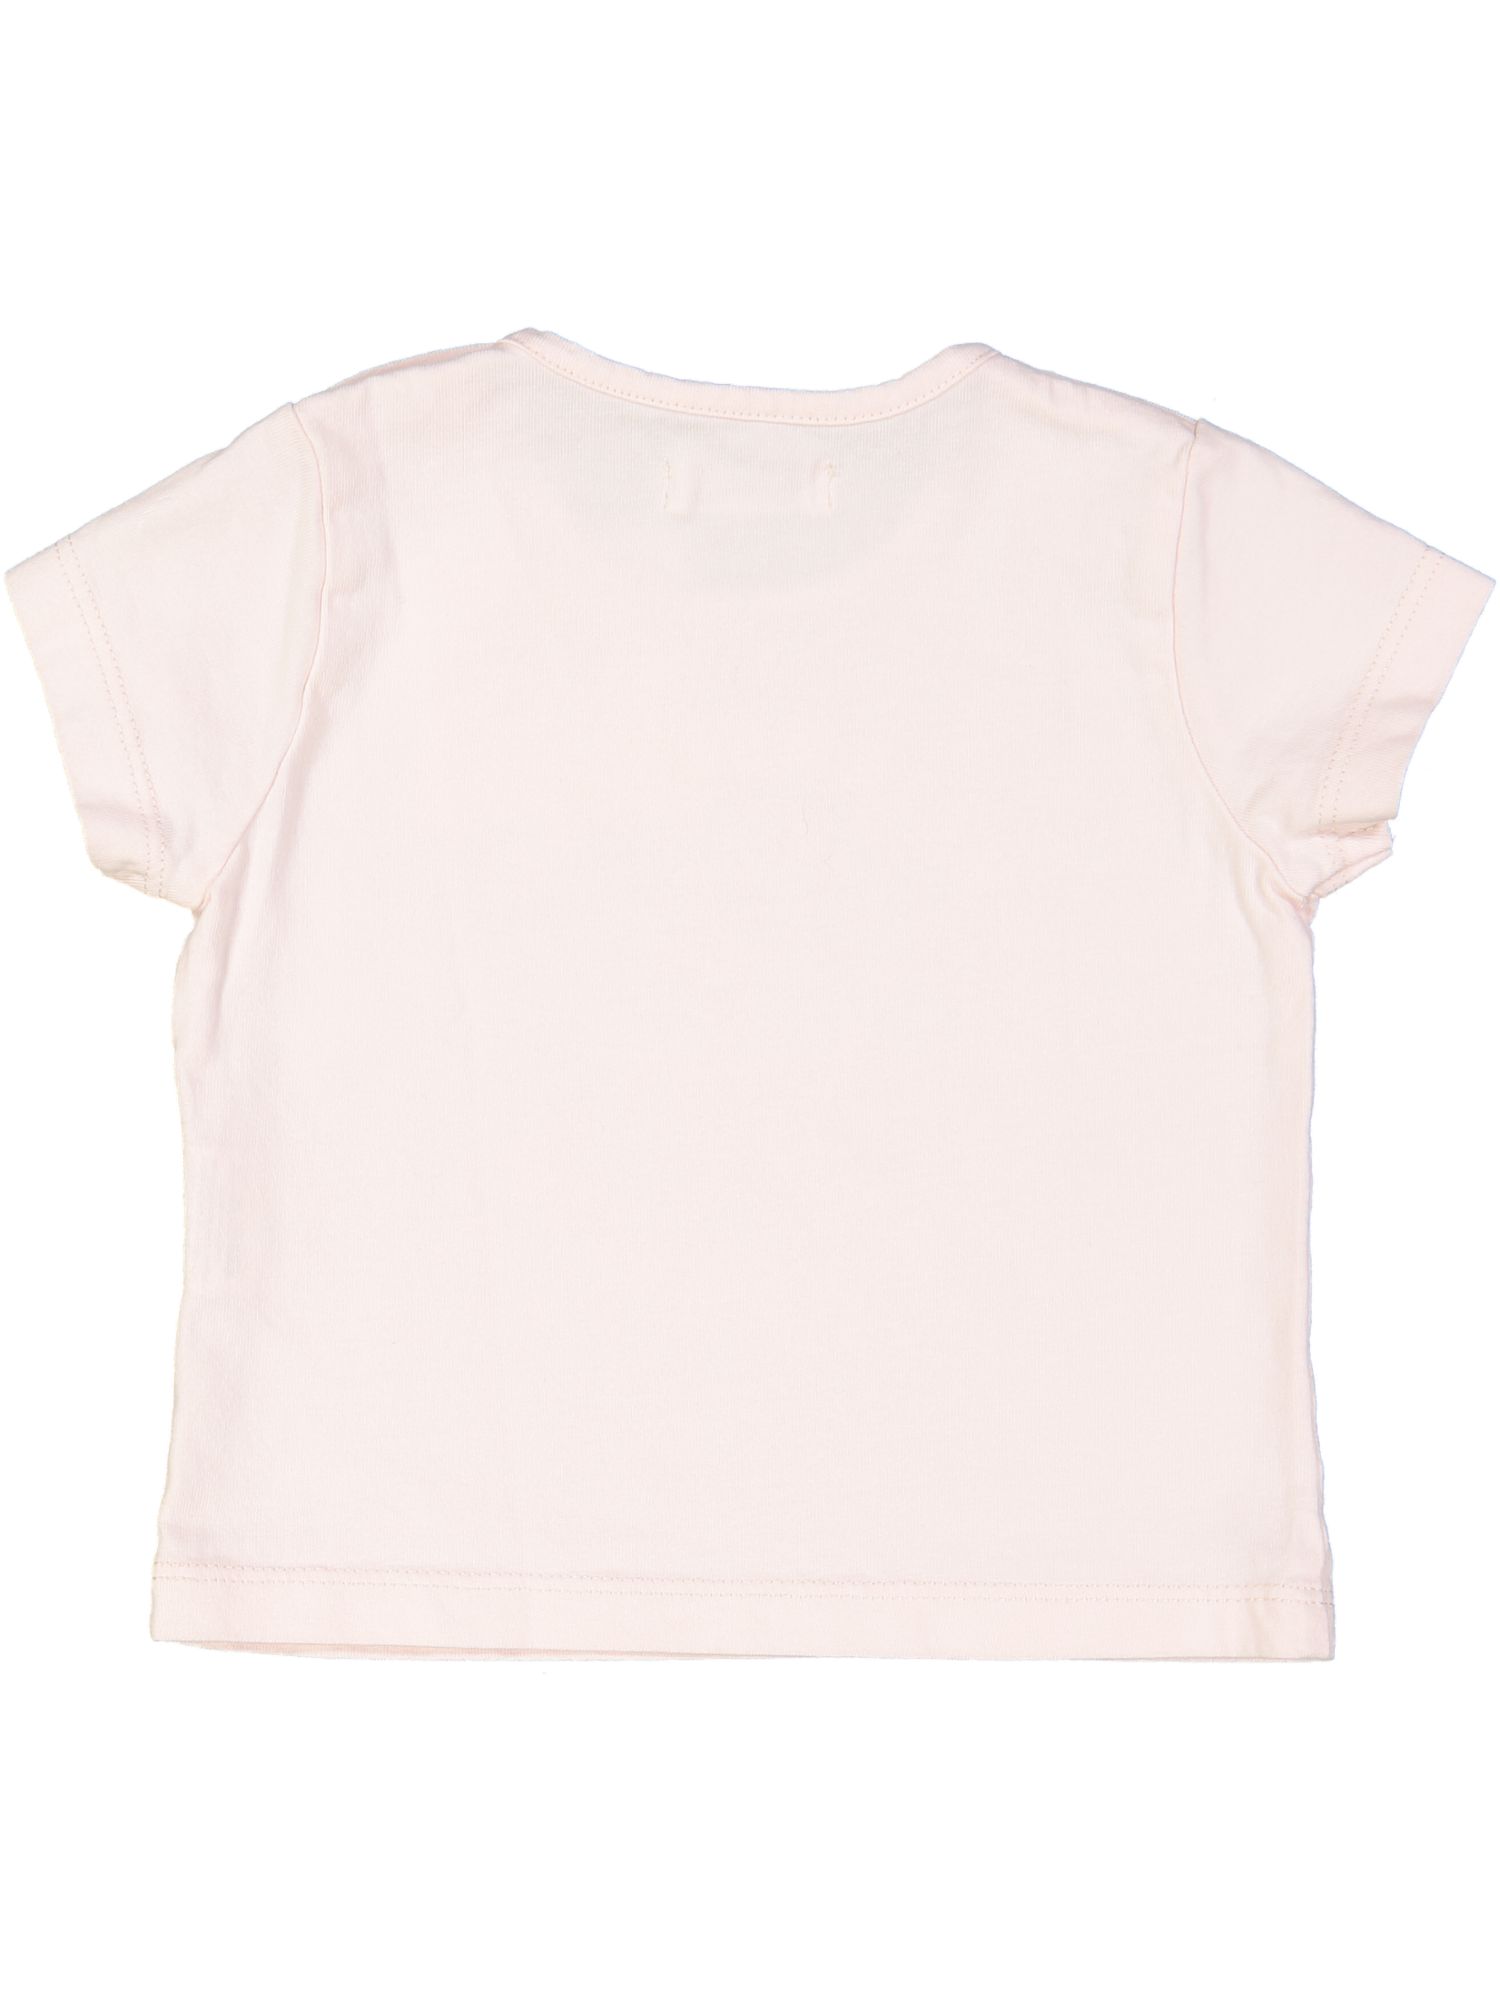 t-shirt roze metamorfose 03m